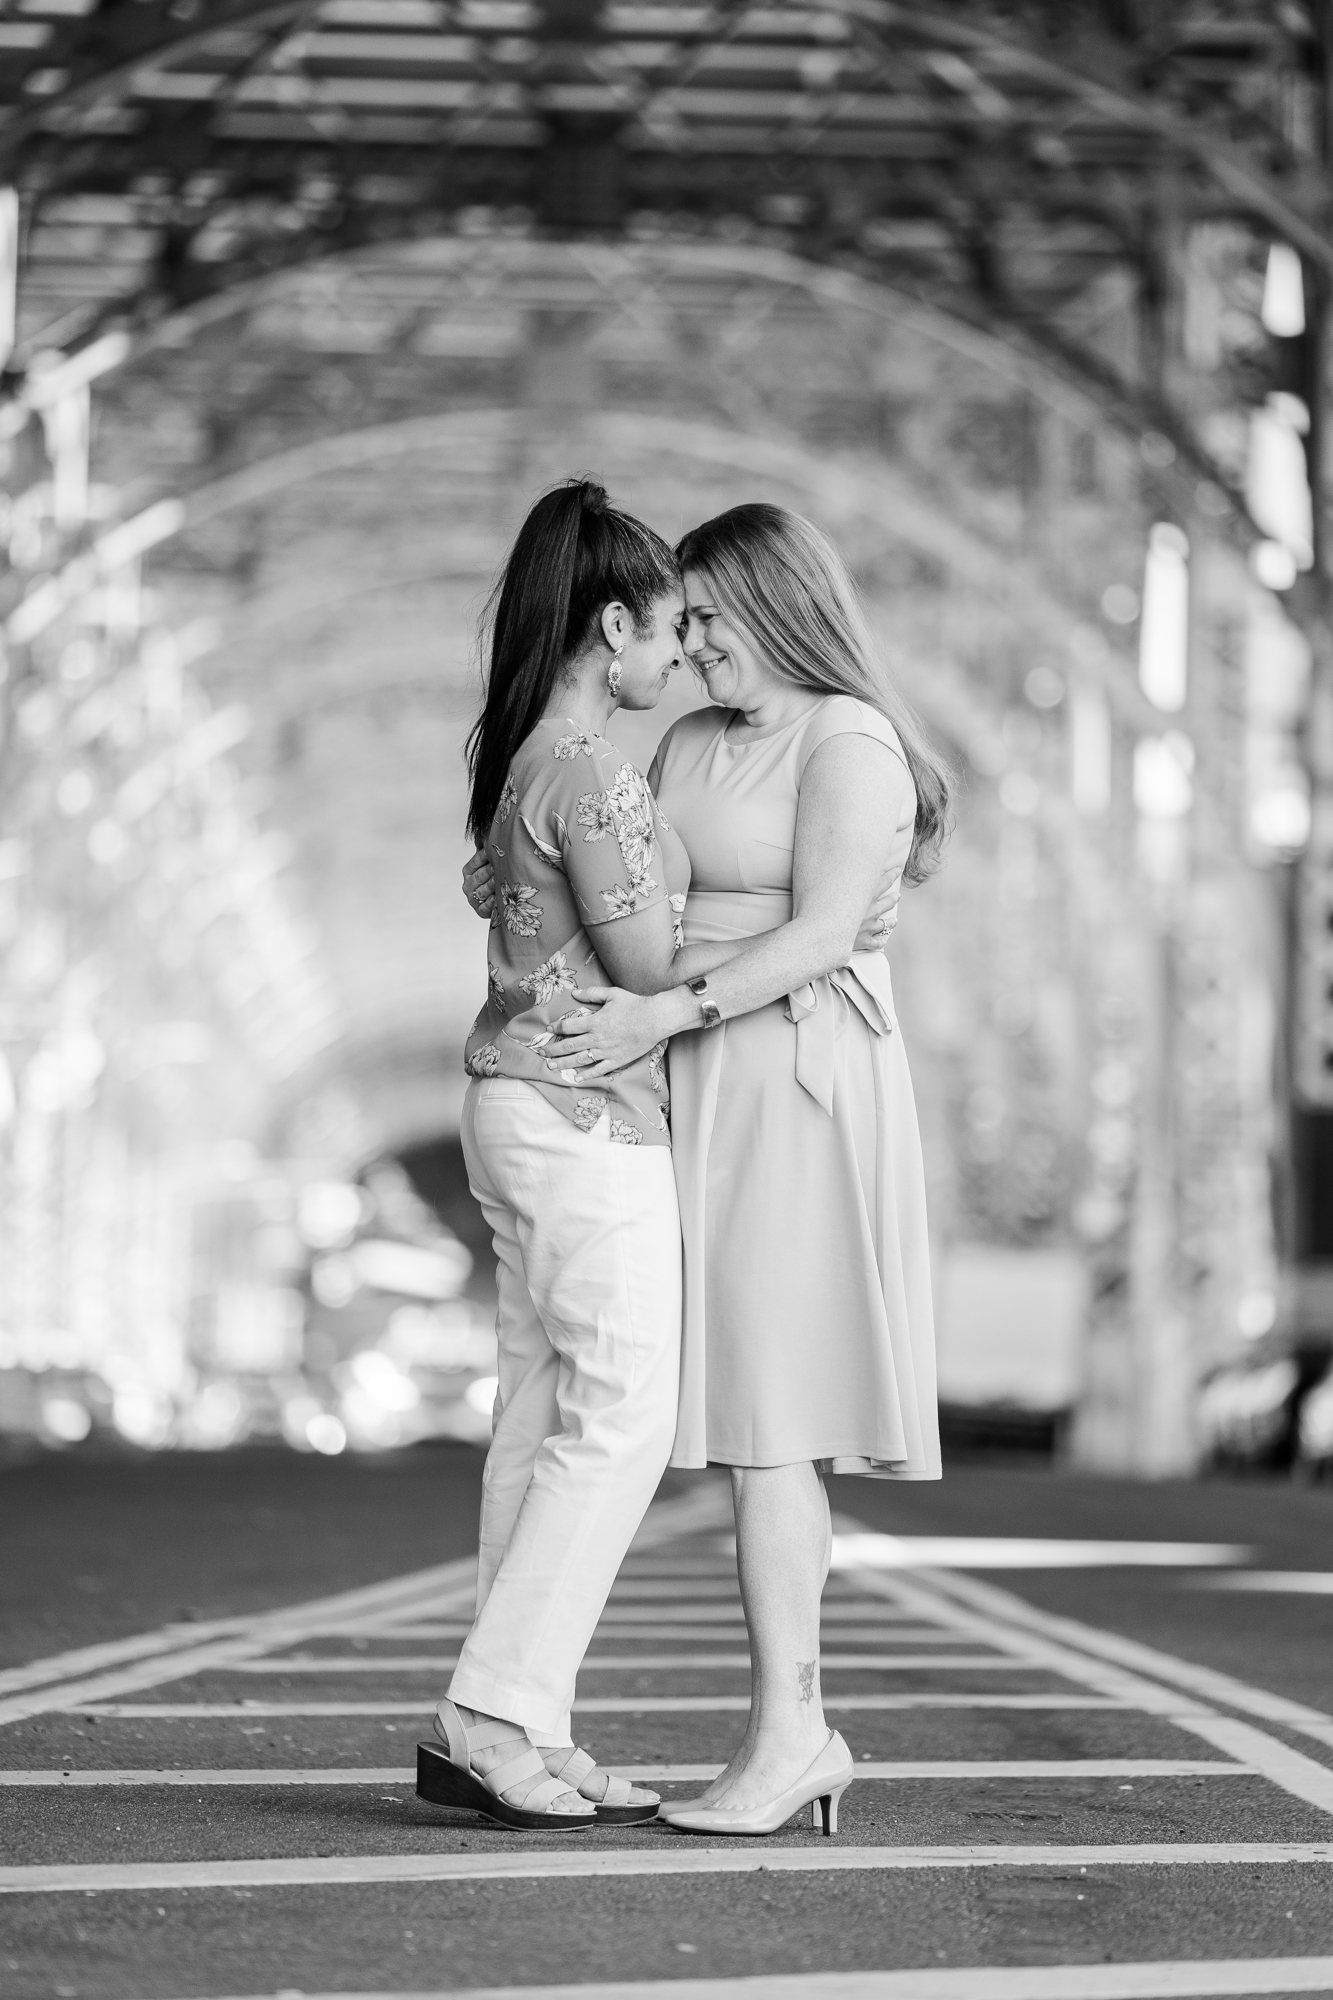 Dazzling Engagement Photo Shoot in Harlem, New York